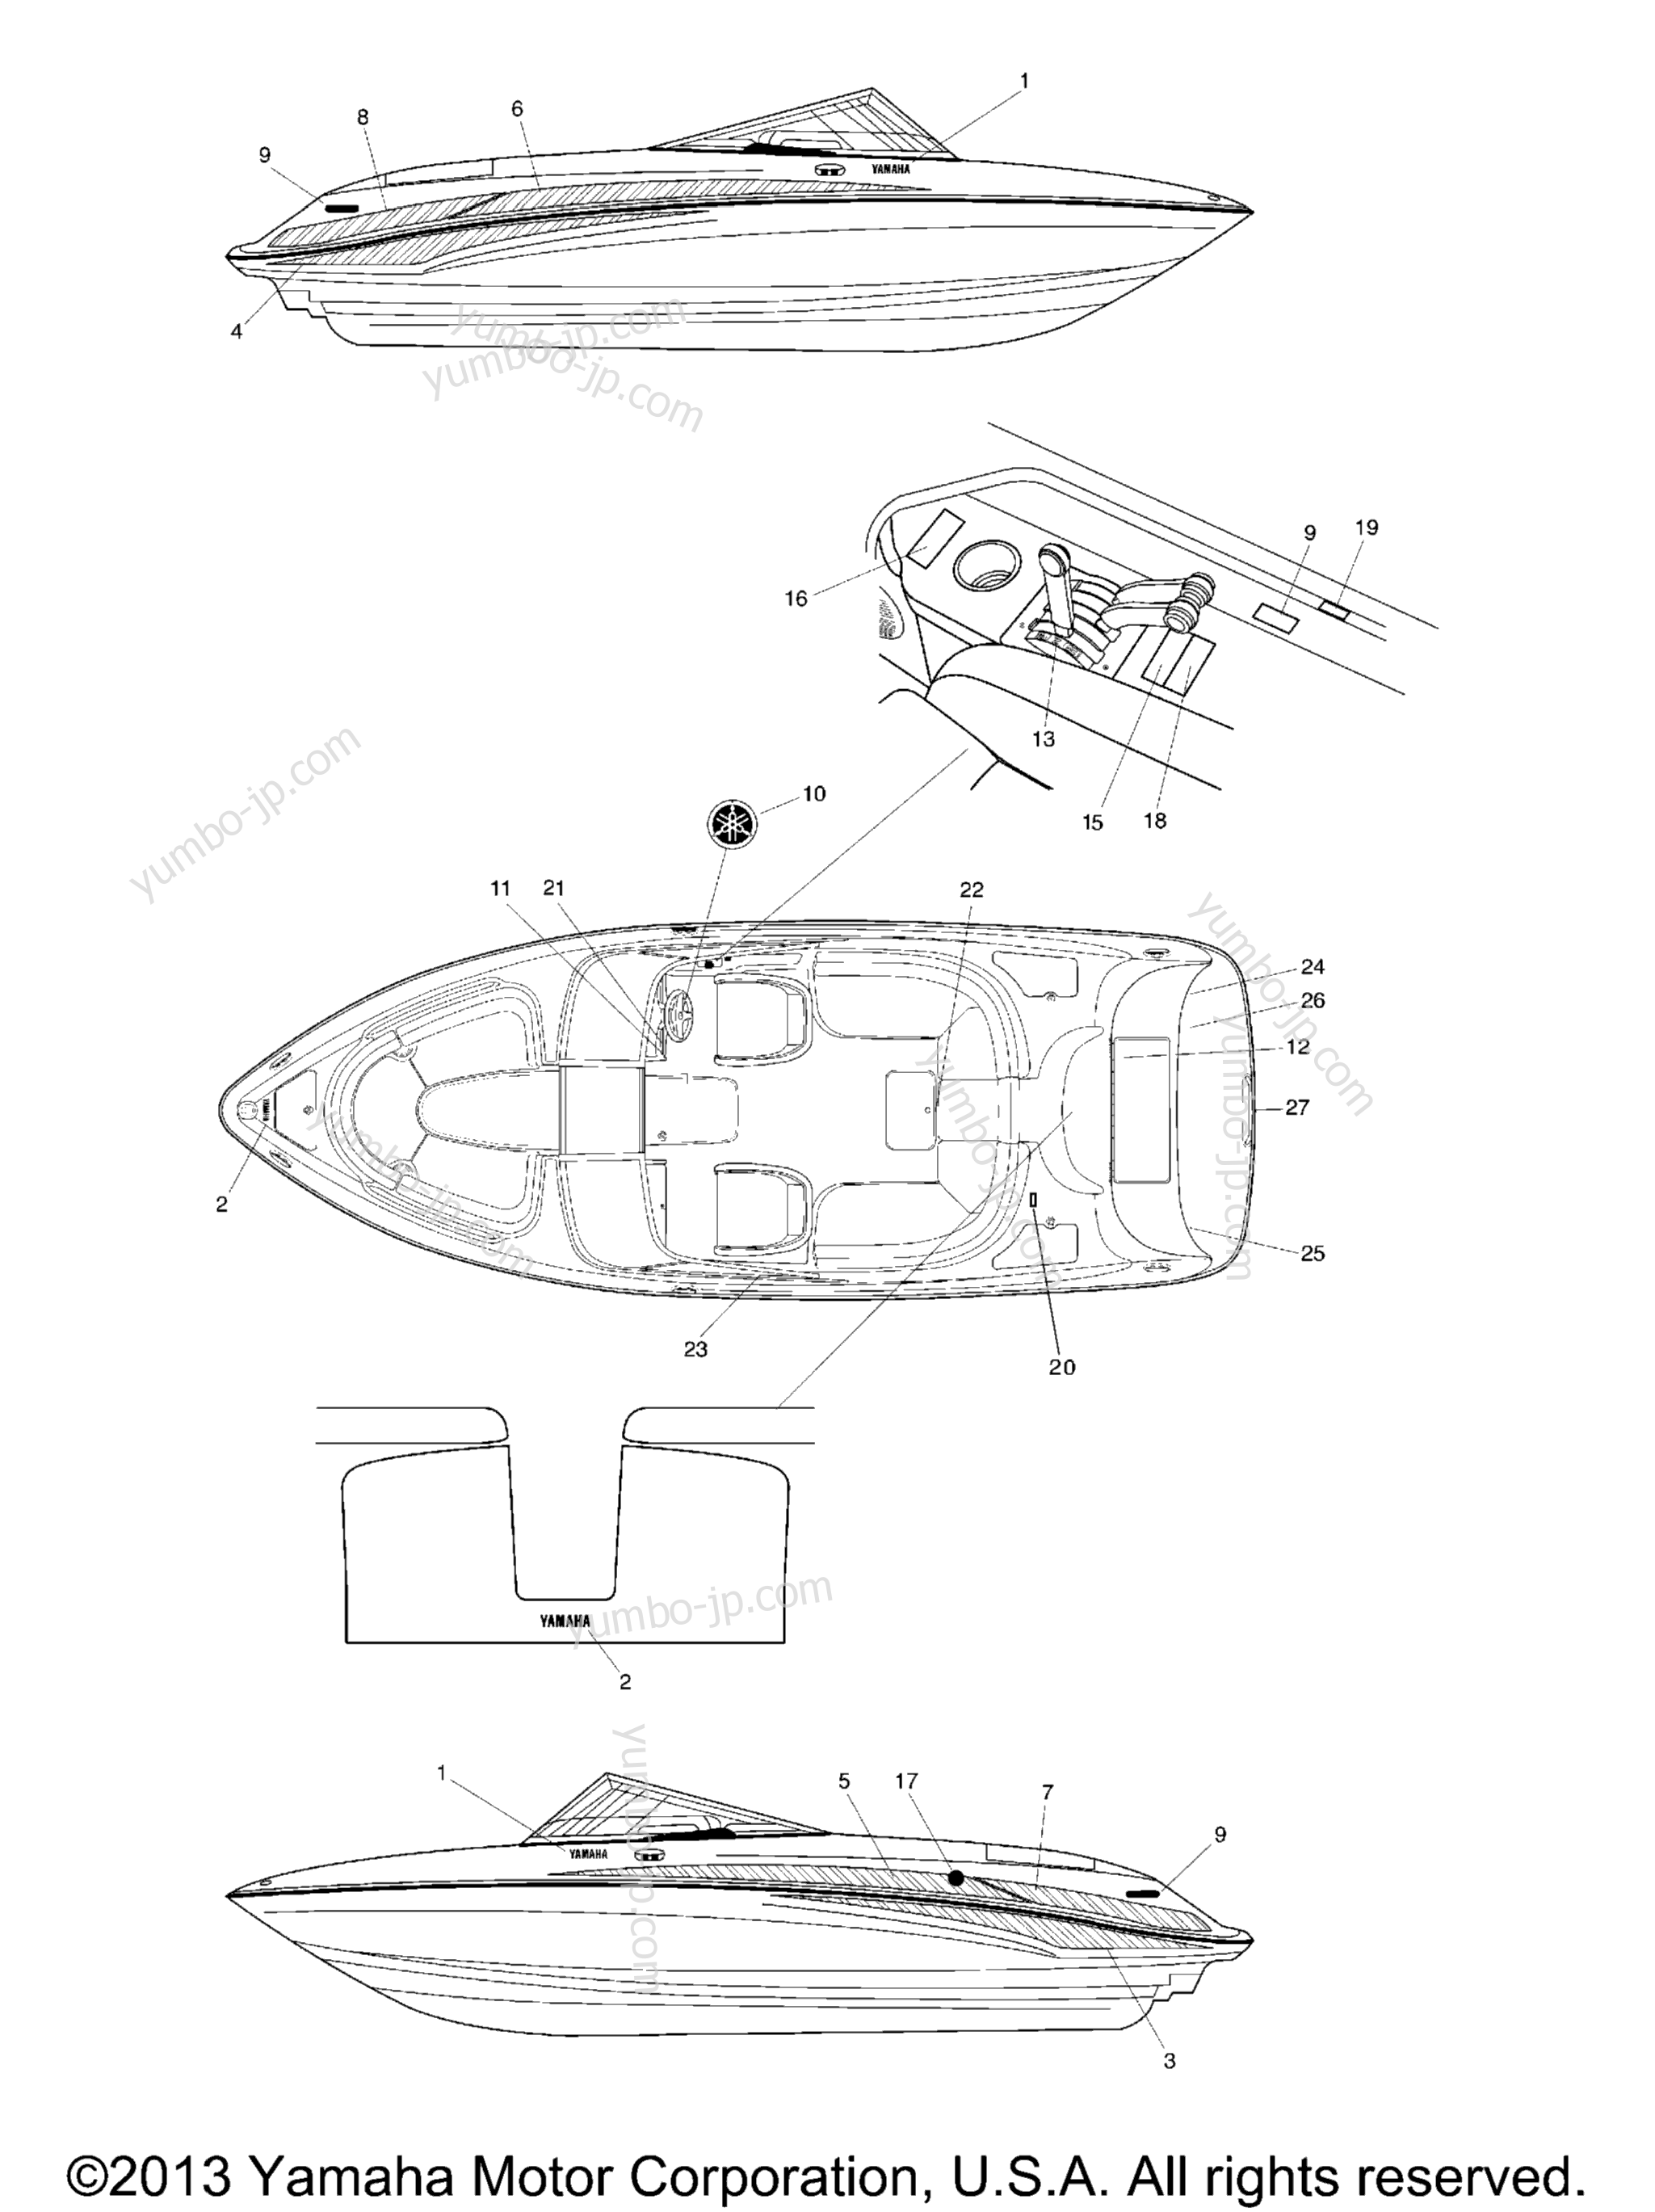 Graphics for boats YAMAHA SR230 (CALIF) (SRT1000CB) CA 2003 year